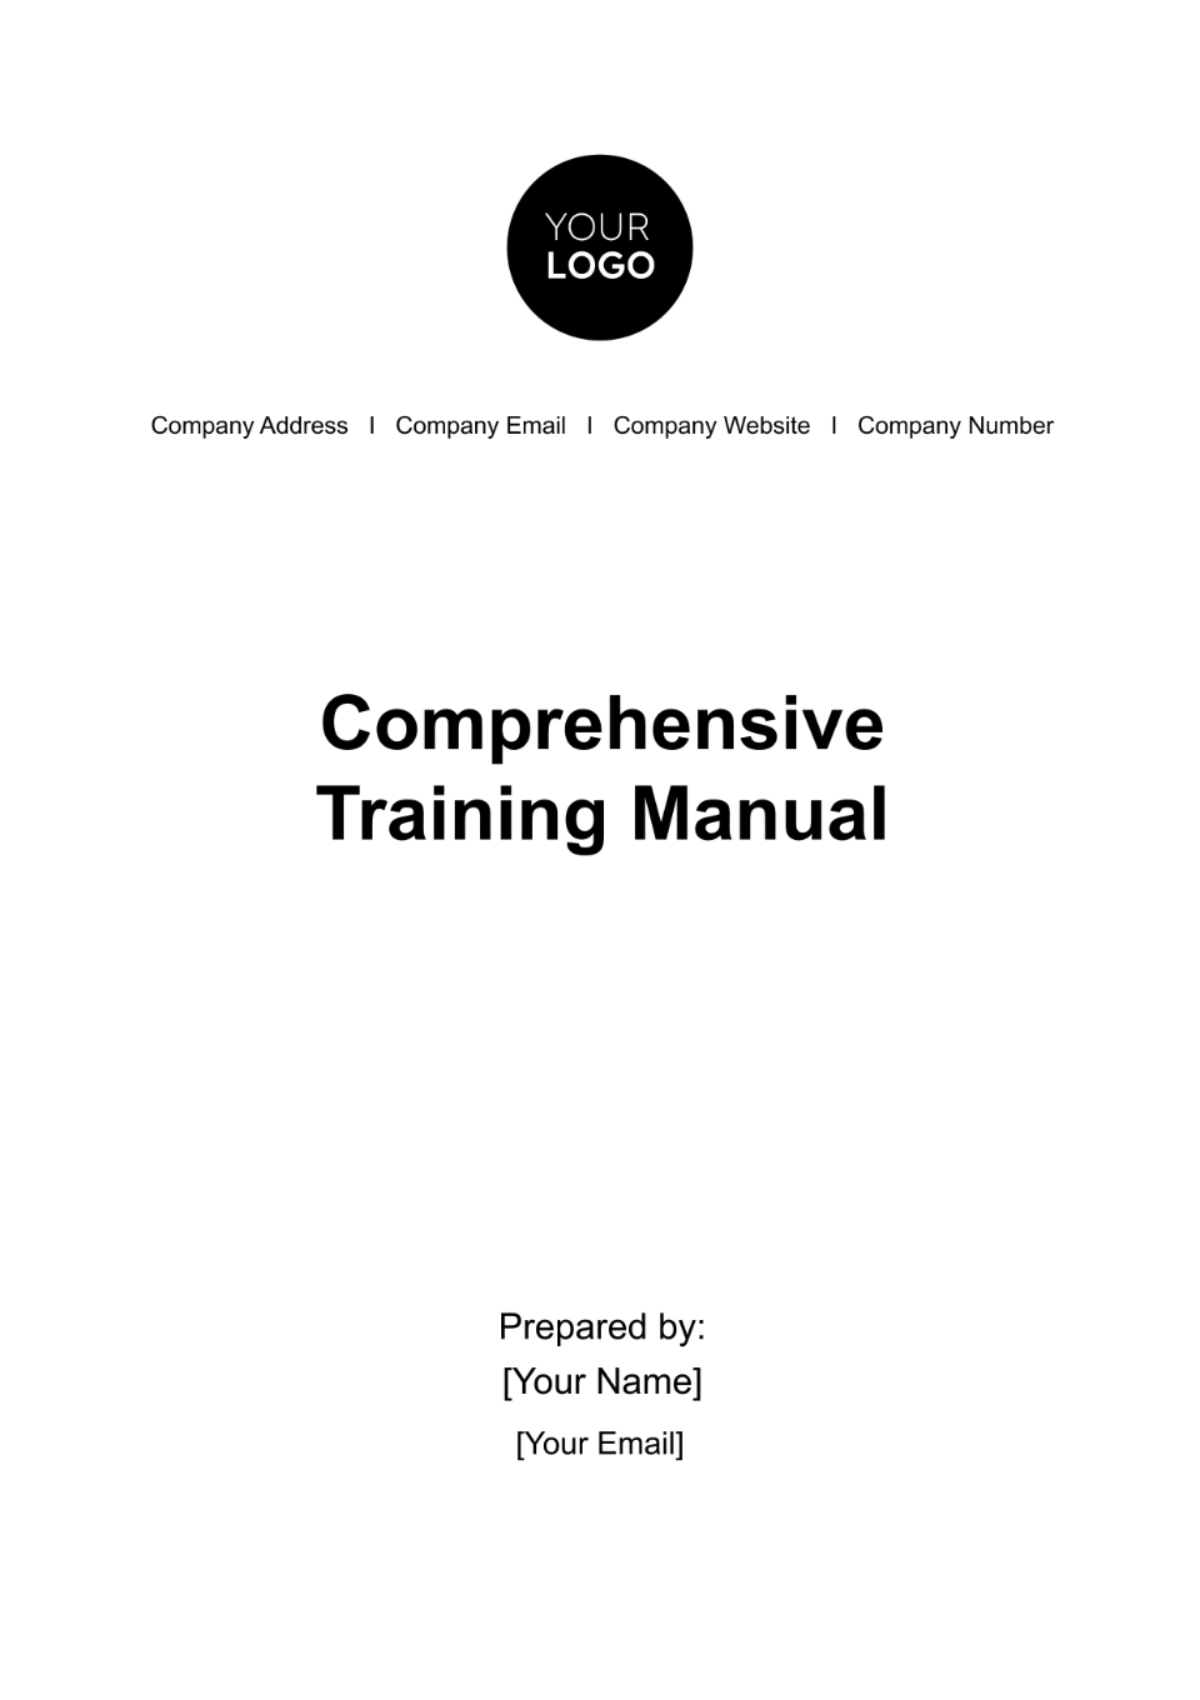 Comprehensive Training Manual HR Template